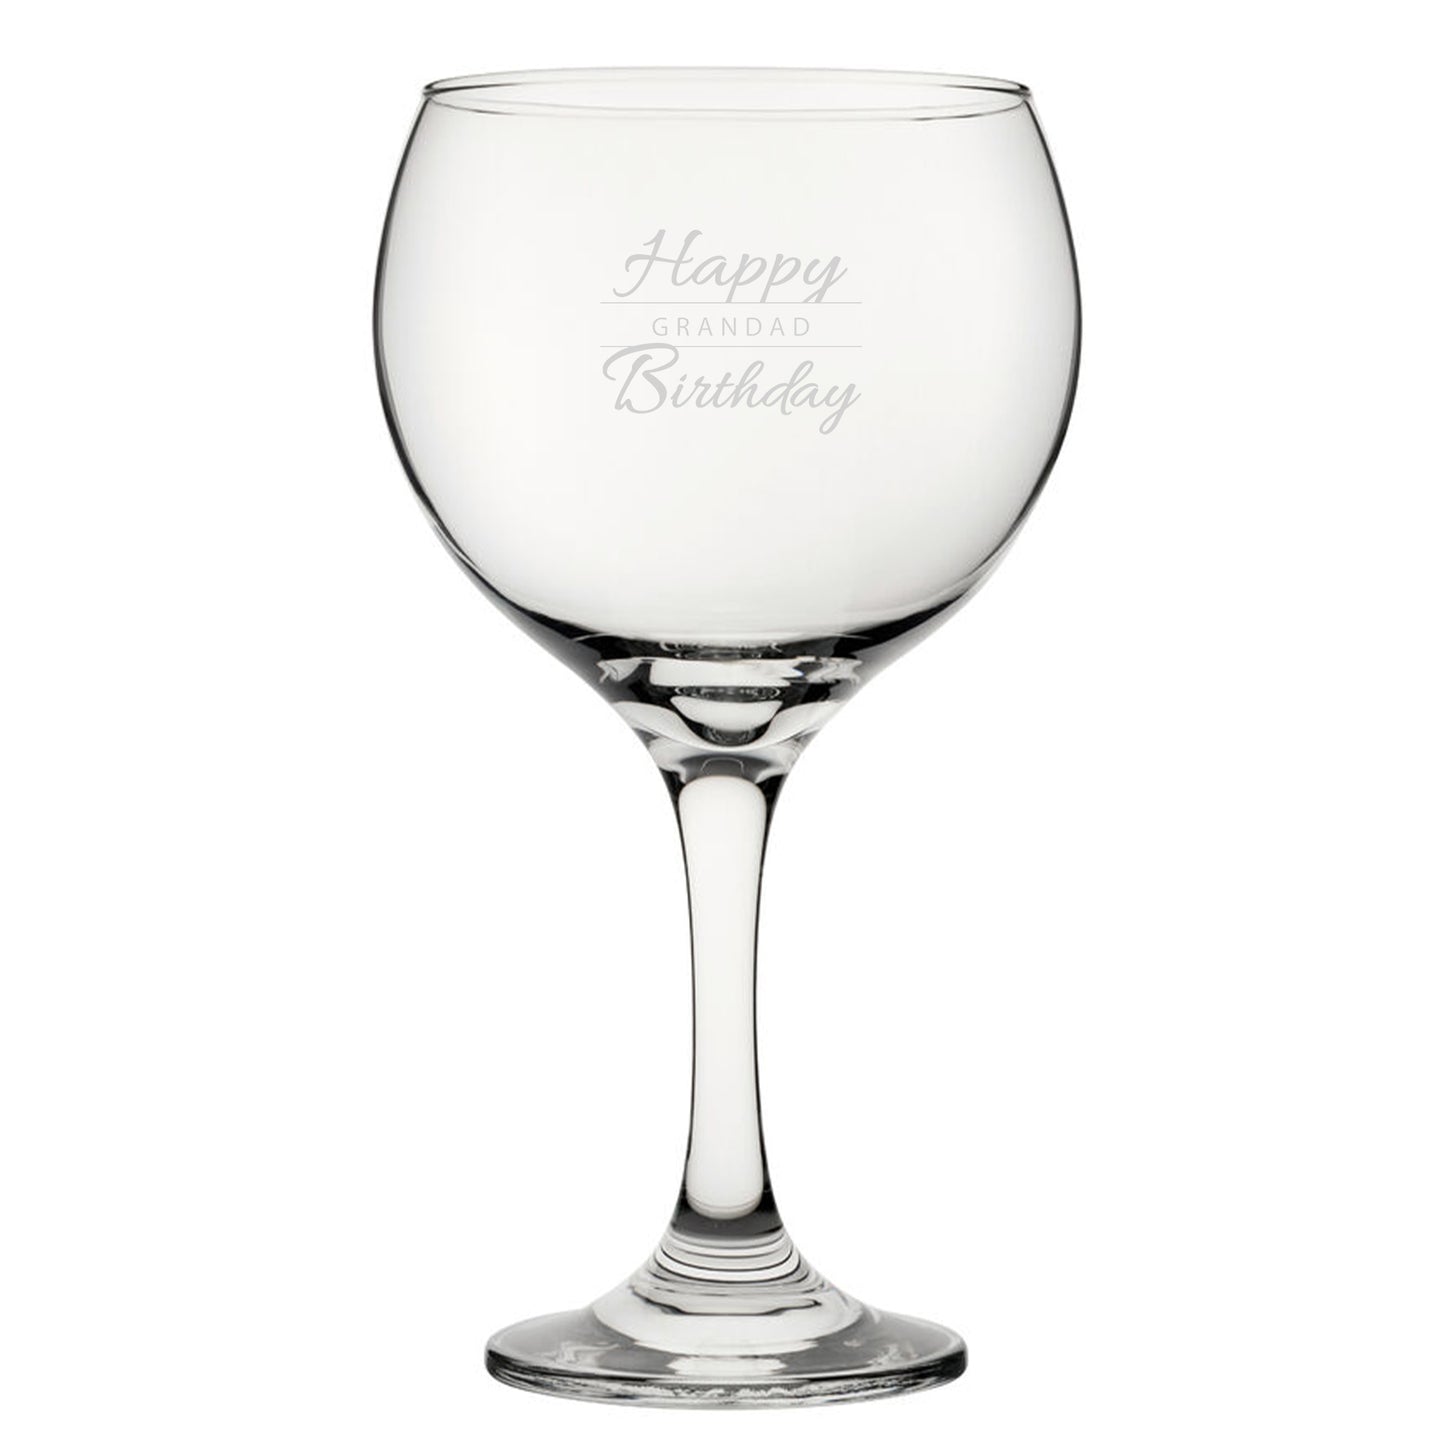 Happy Birthday Grandad Modern Design - Engraved Novelty Gin Balloon Cocktail Glass Image 2